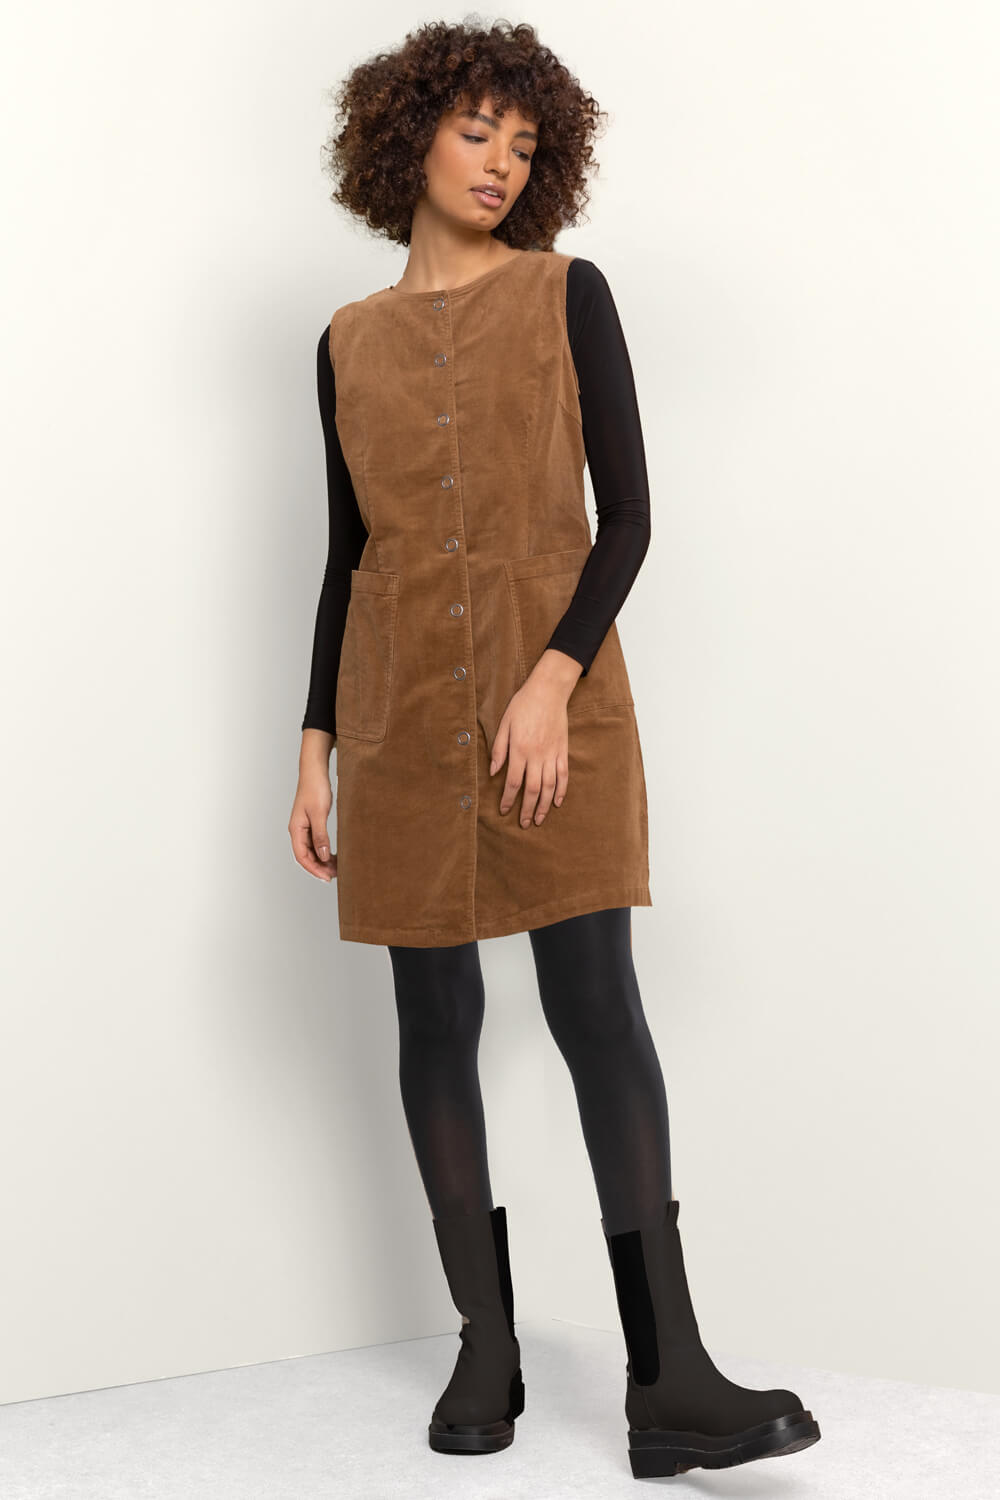 3 Ways to Style an Overalls Dress // Rachel Green Inspired Outfit -  Kentucky Girl Ramblings